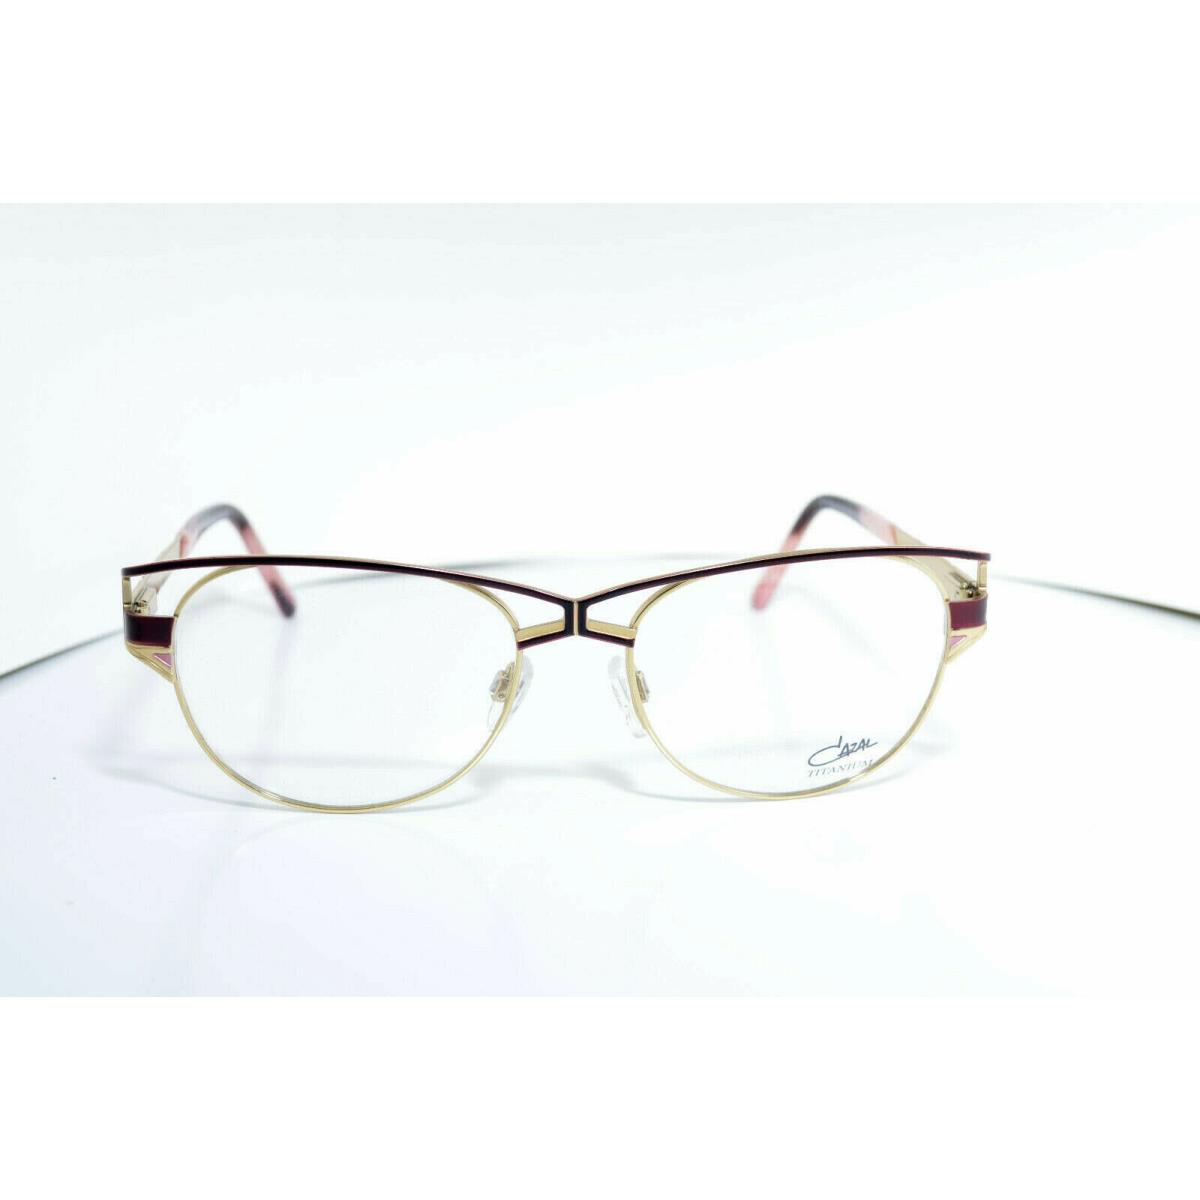 Cazal eyeglasses  - BURGUNDY/GOLD Frame 0